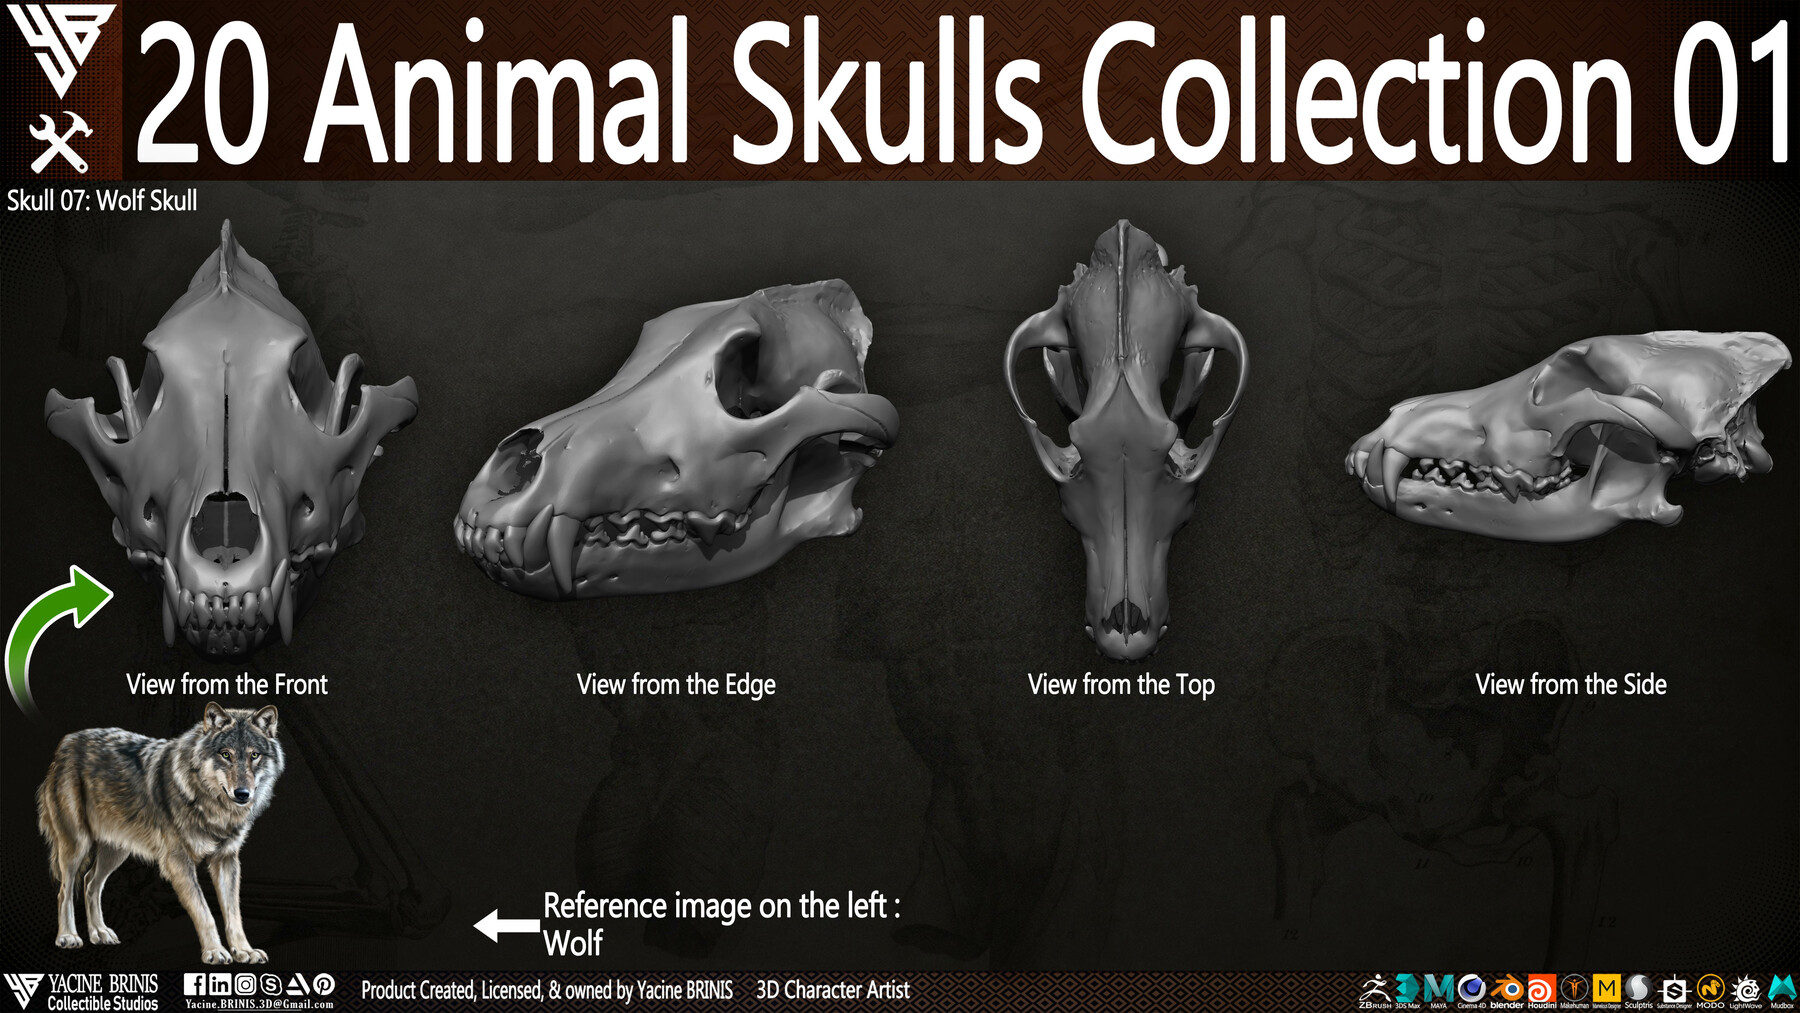 ArtStation - 20 Animal Skulls Collection 01 | Resources